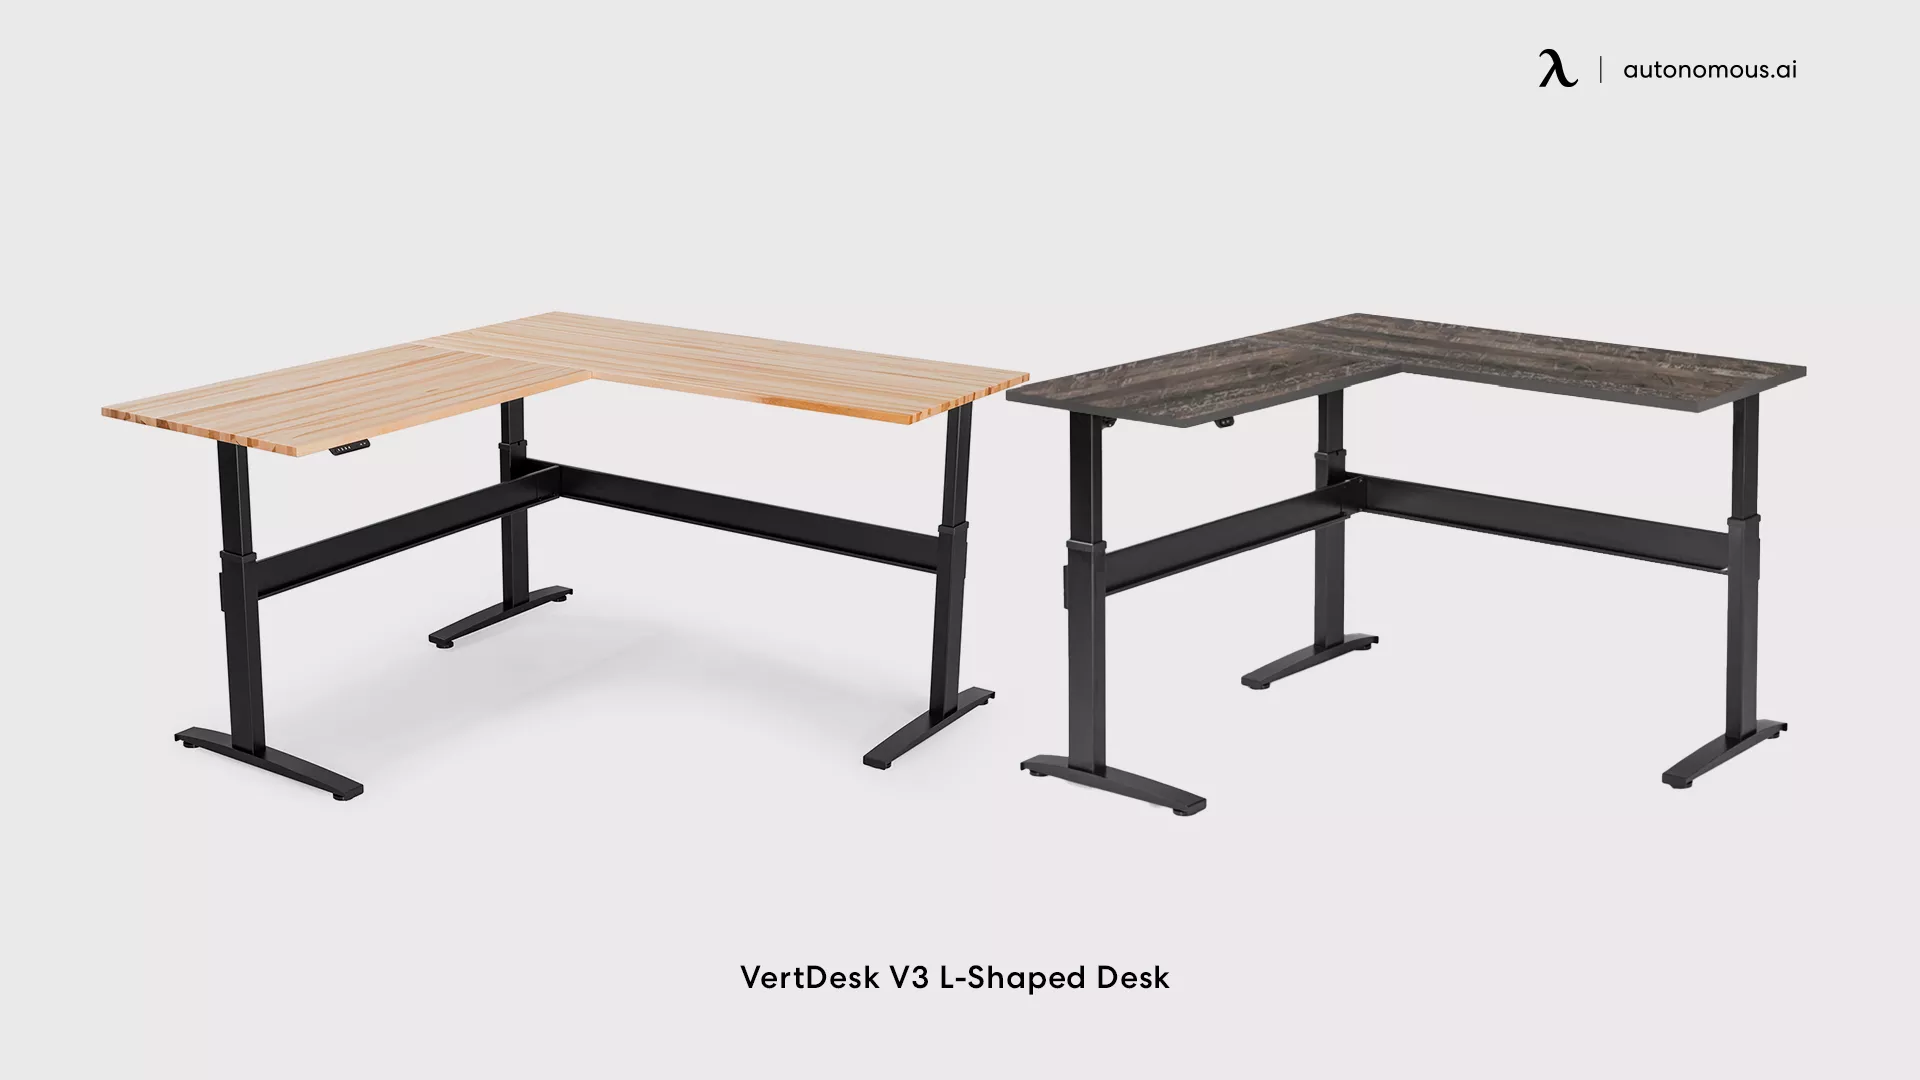 VertDesk V3 L-Shaped Desk